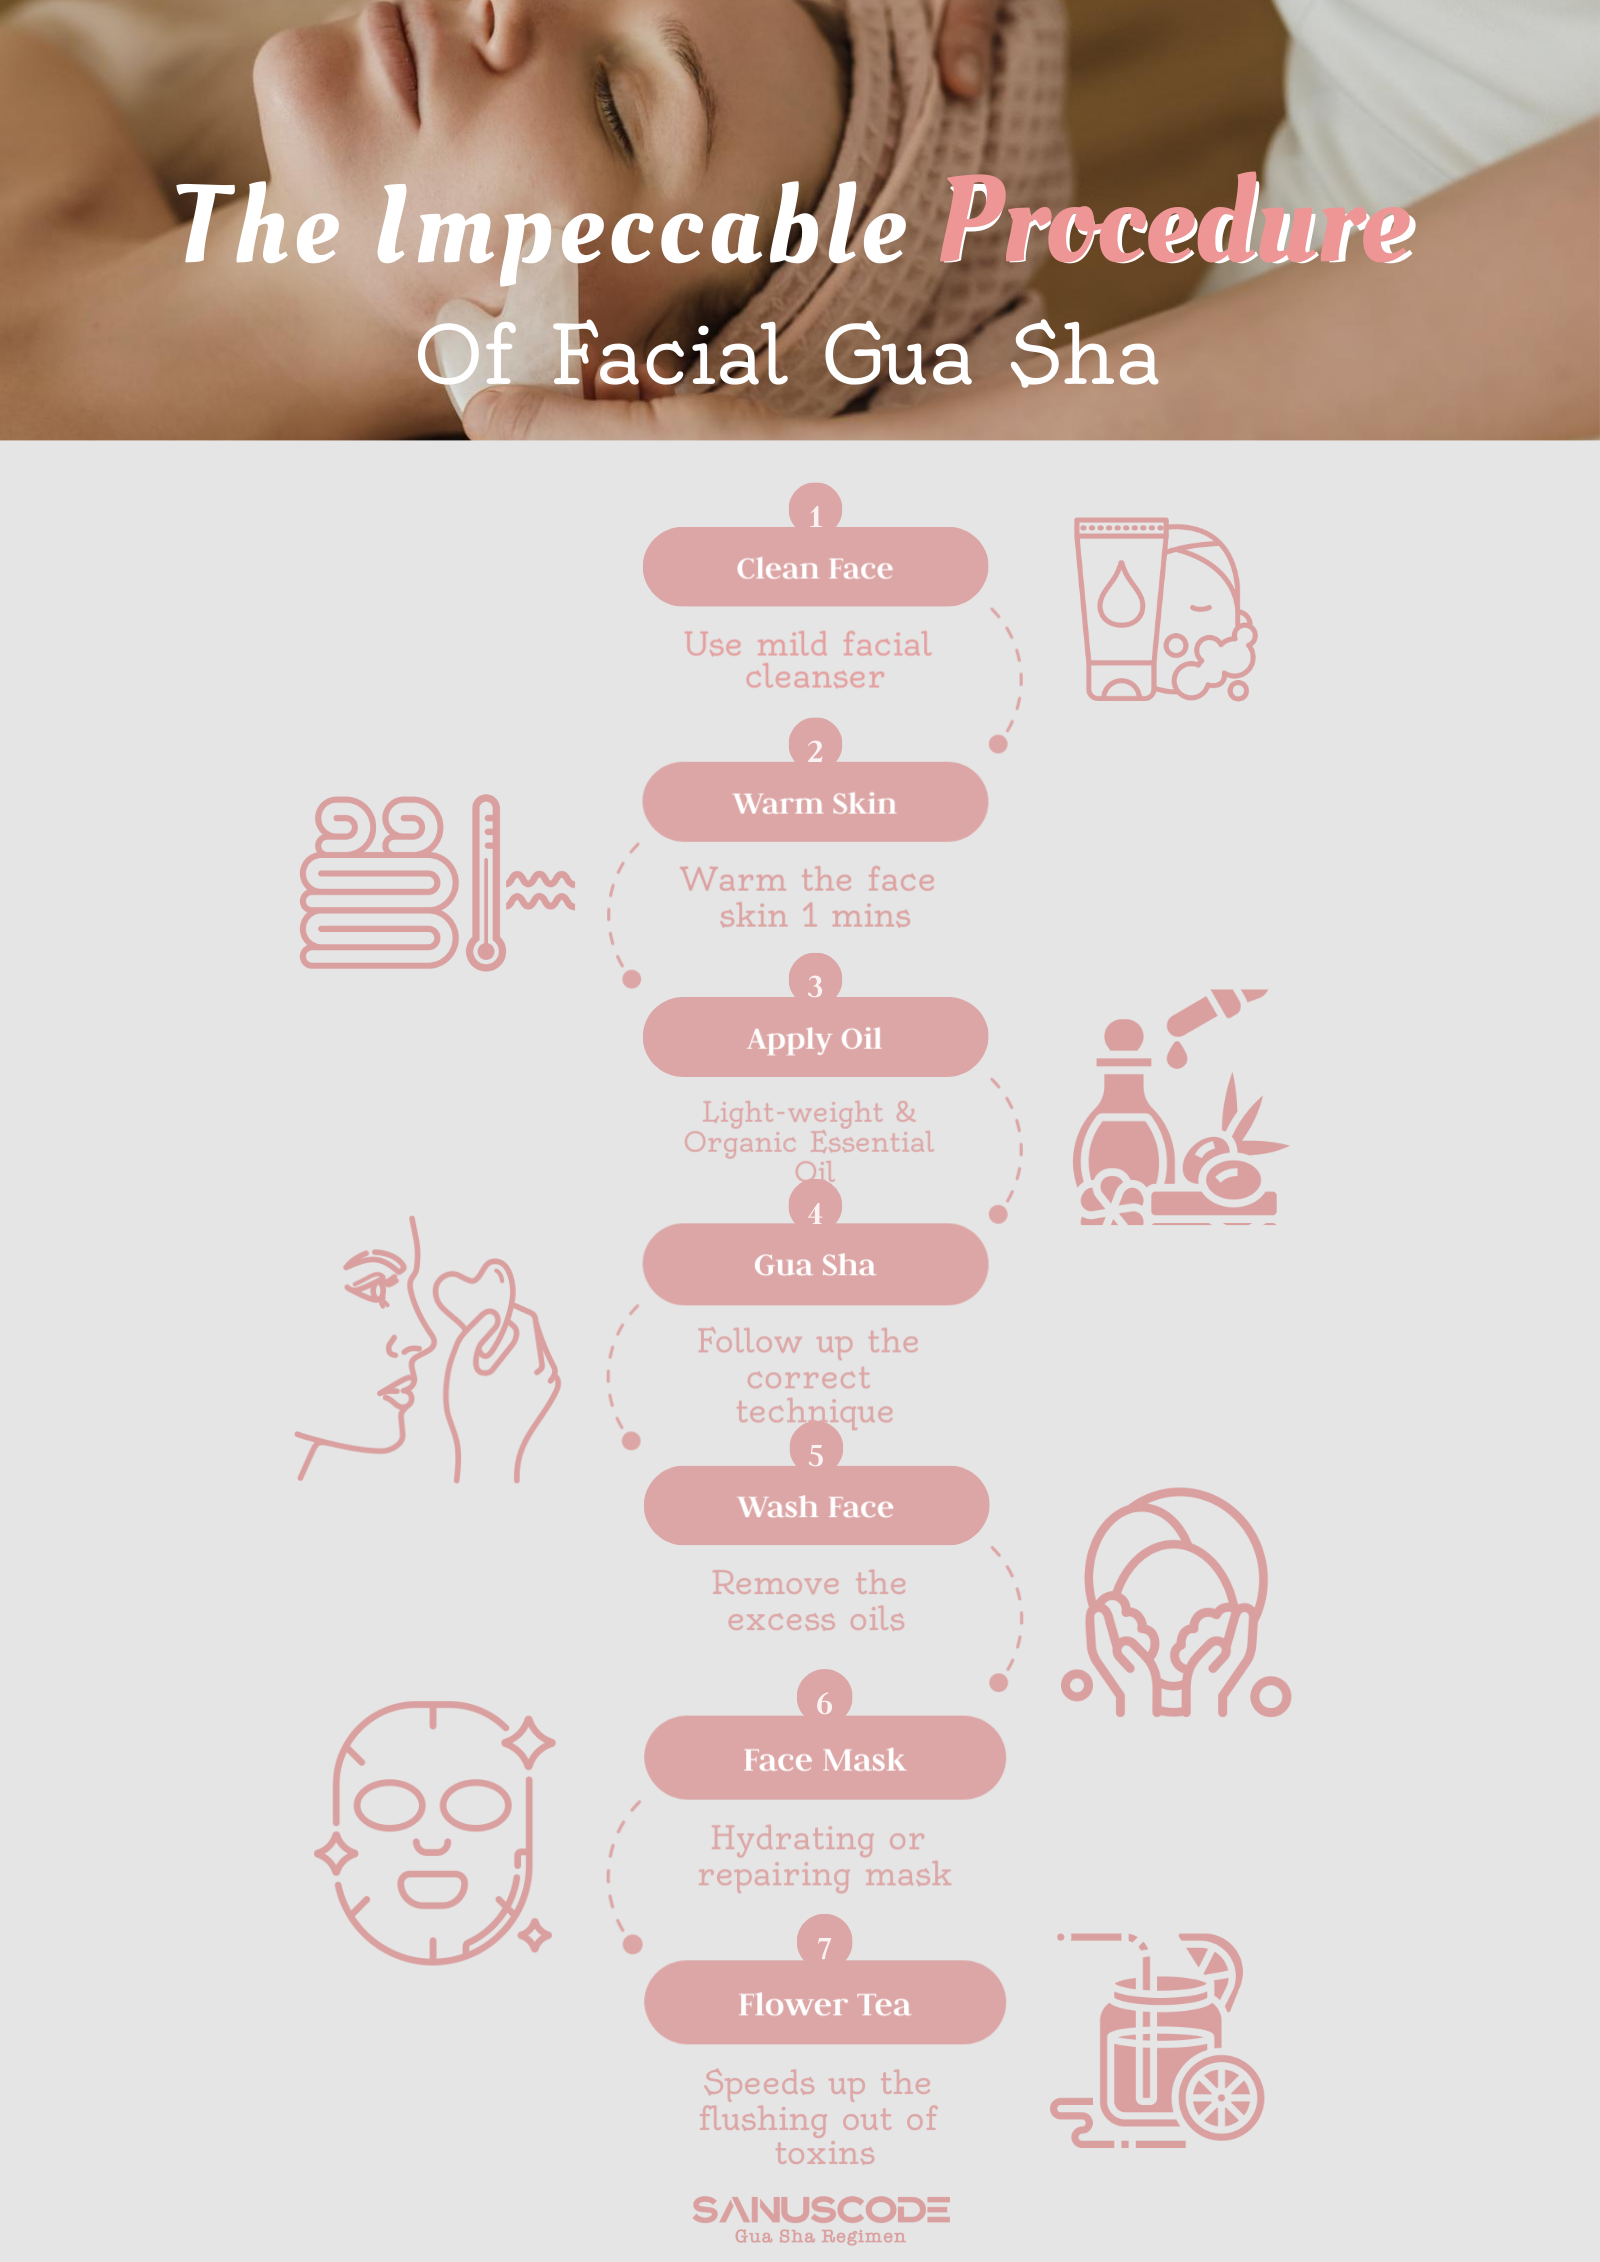 infographic of facial gua sha massage procedure, total 7 steps of gua sha face massage